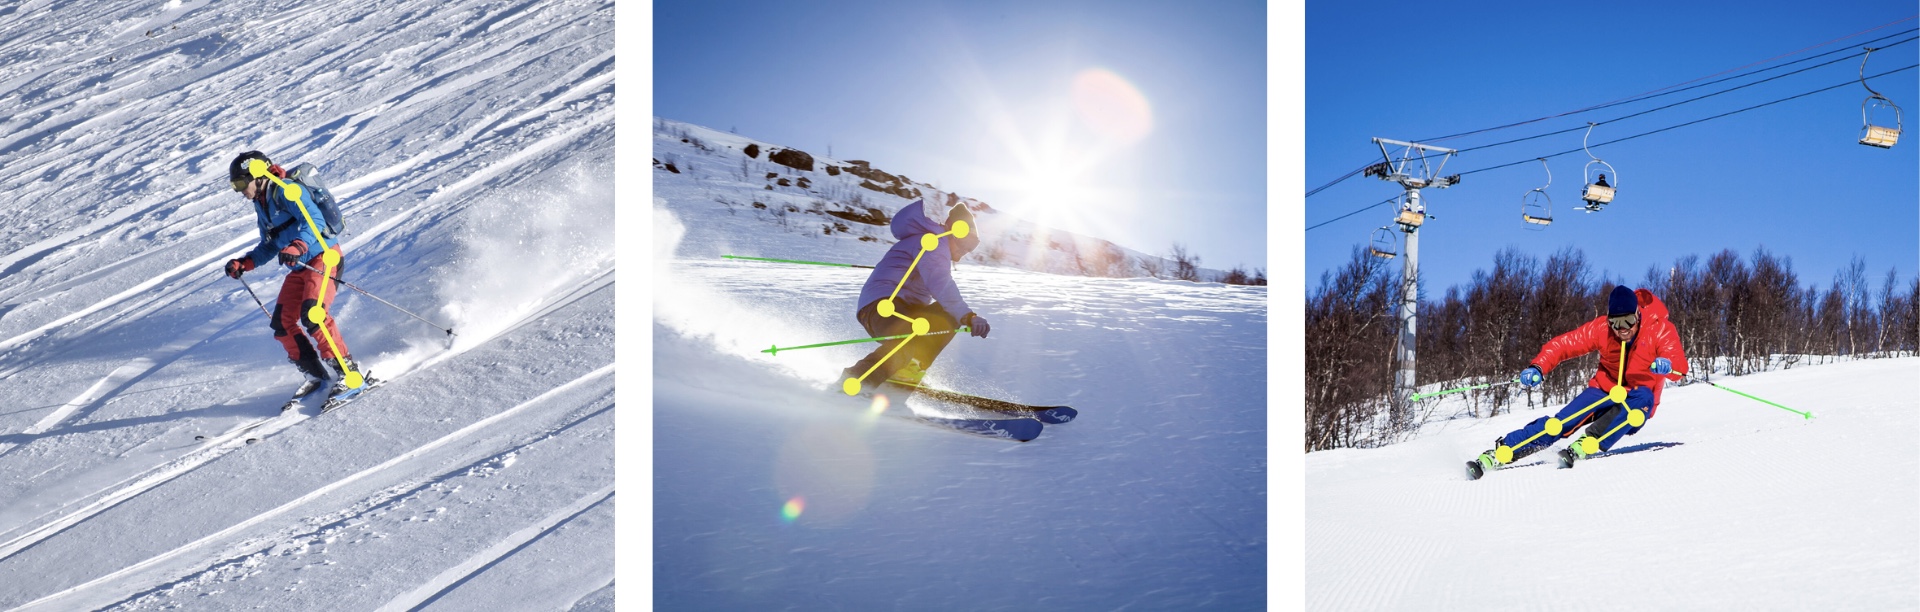 Ski Position and Joint Angles